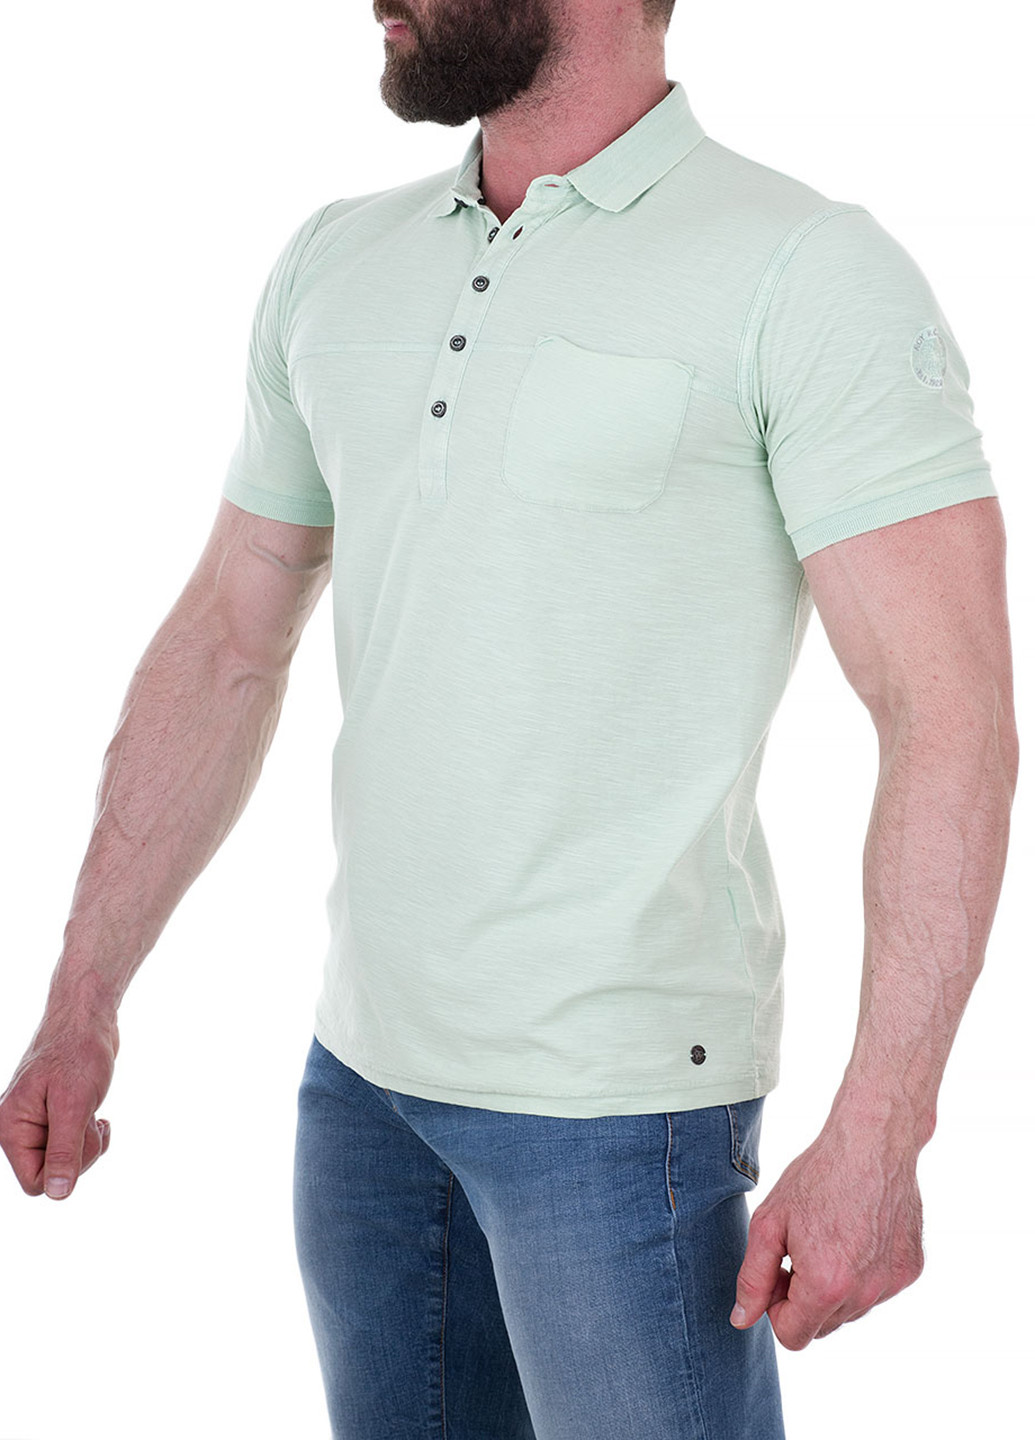 Салатовая футболка-поло для мужчин Roy Robson однотонная